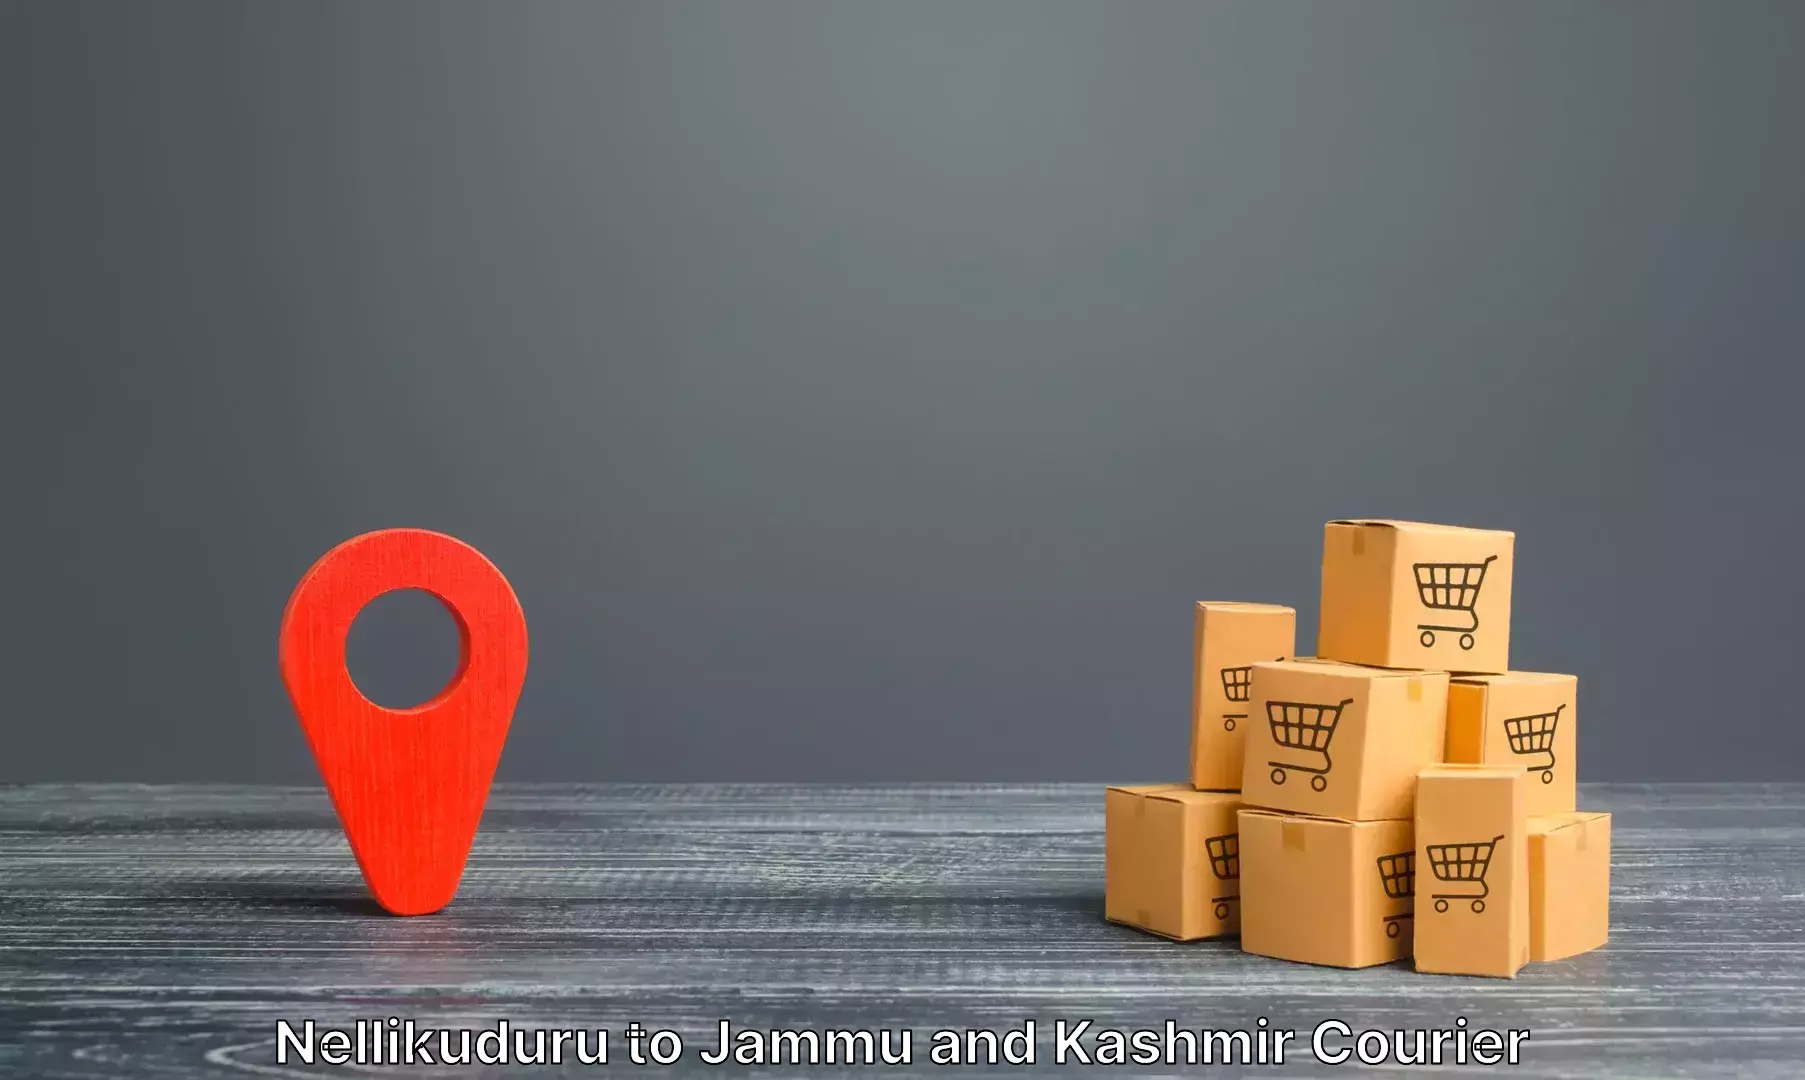 Baggage relocation service Nellikuduru to Srinagar Kashmir